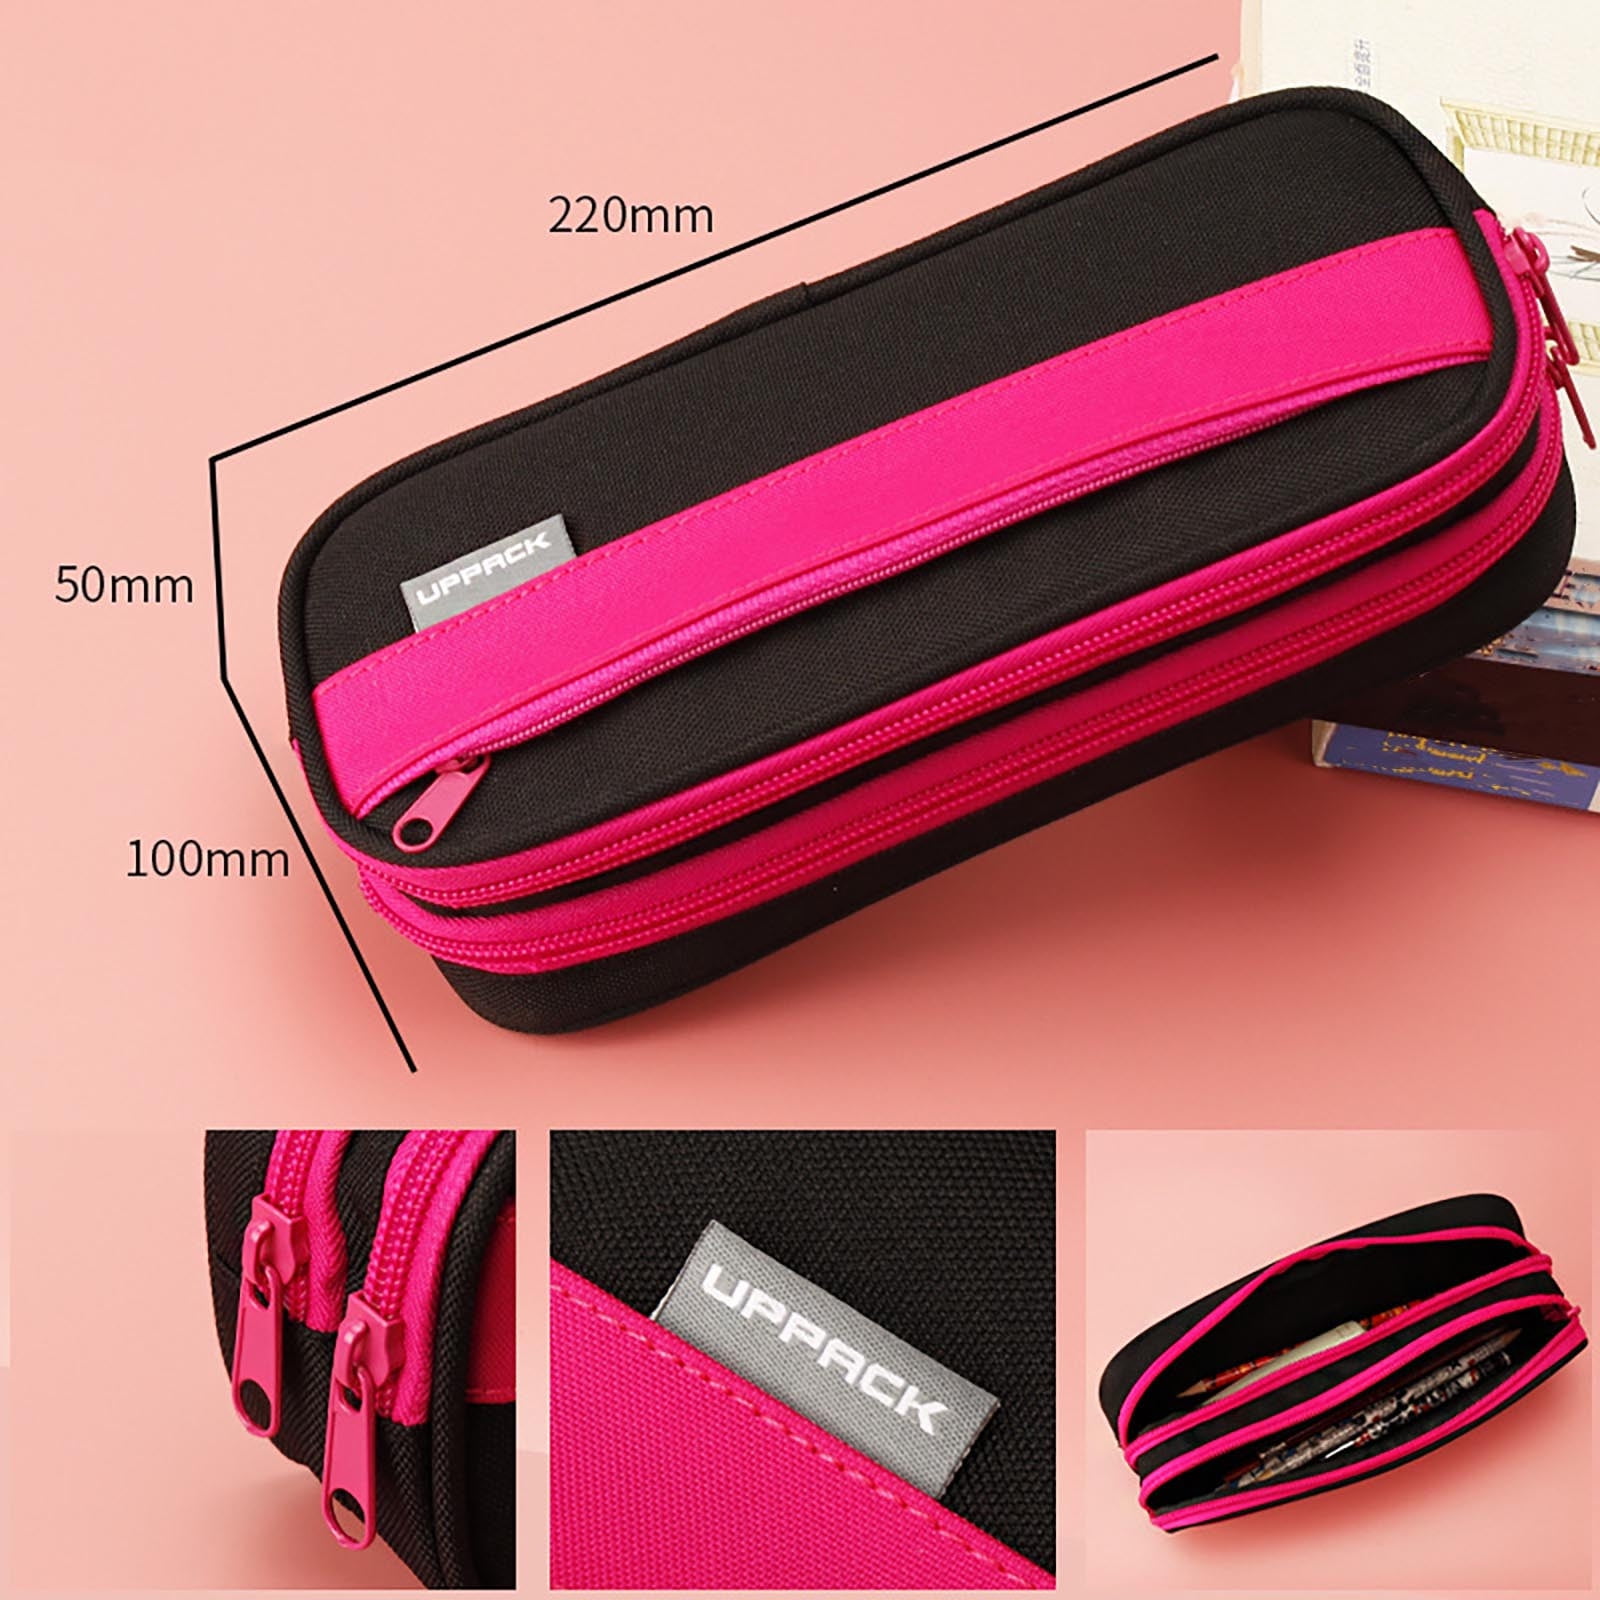 Pompotops Pencil Case Pen Bag Holder Pouch, Three-layer Color